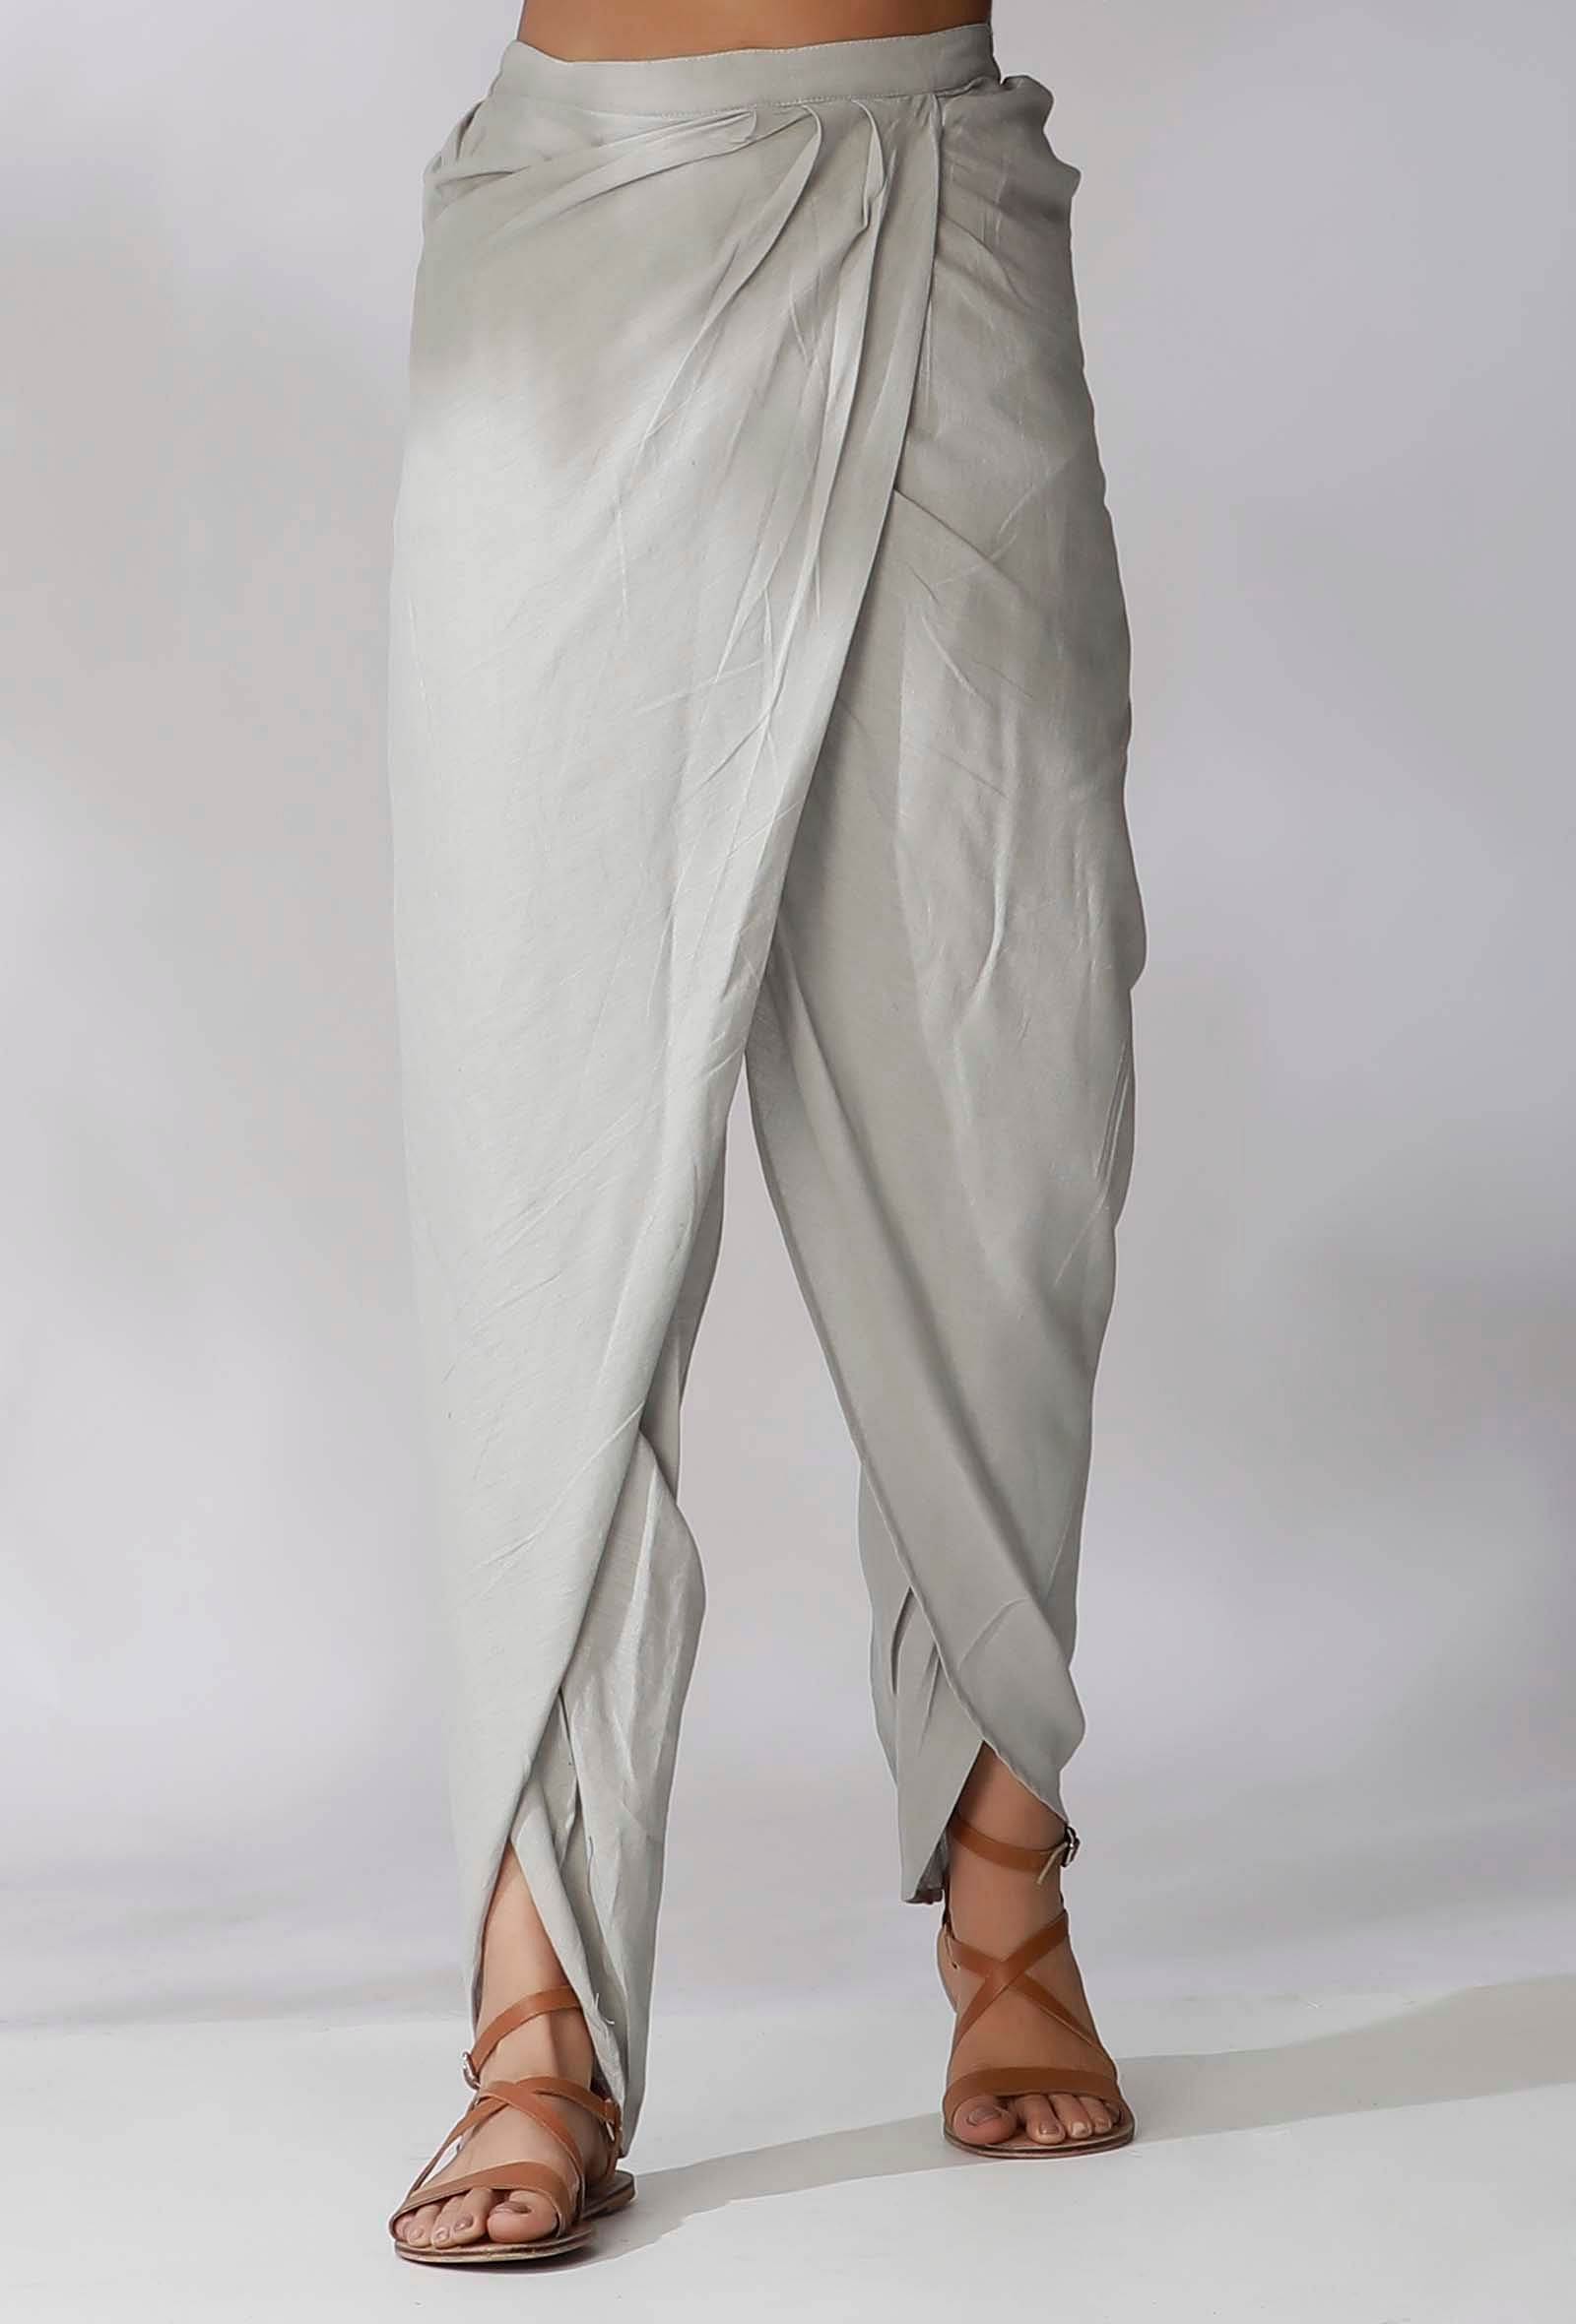 Buy VAIDIKI Women Stylish Cotton dhoti pants at Amazon.in